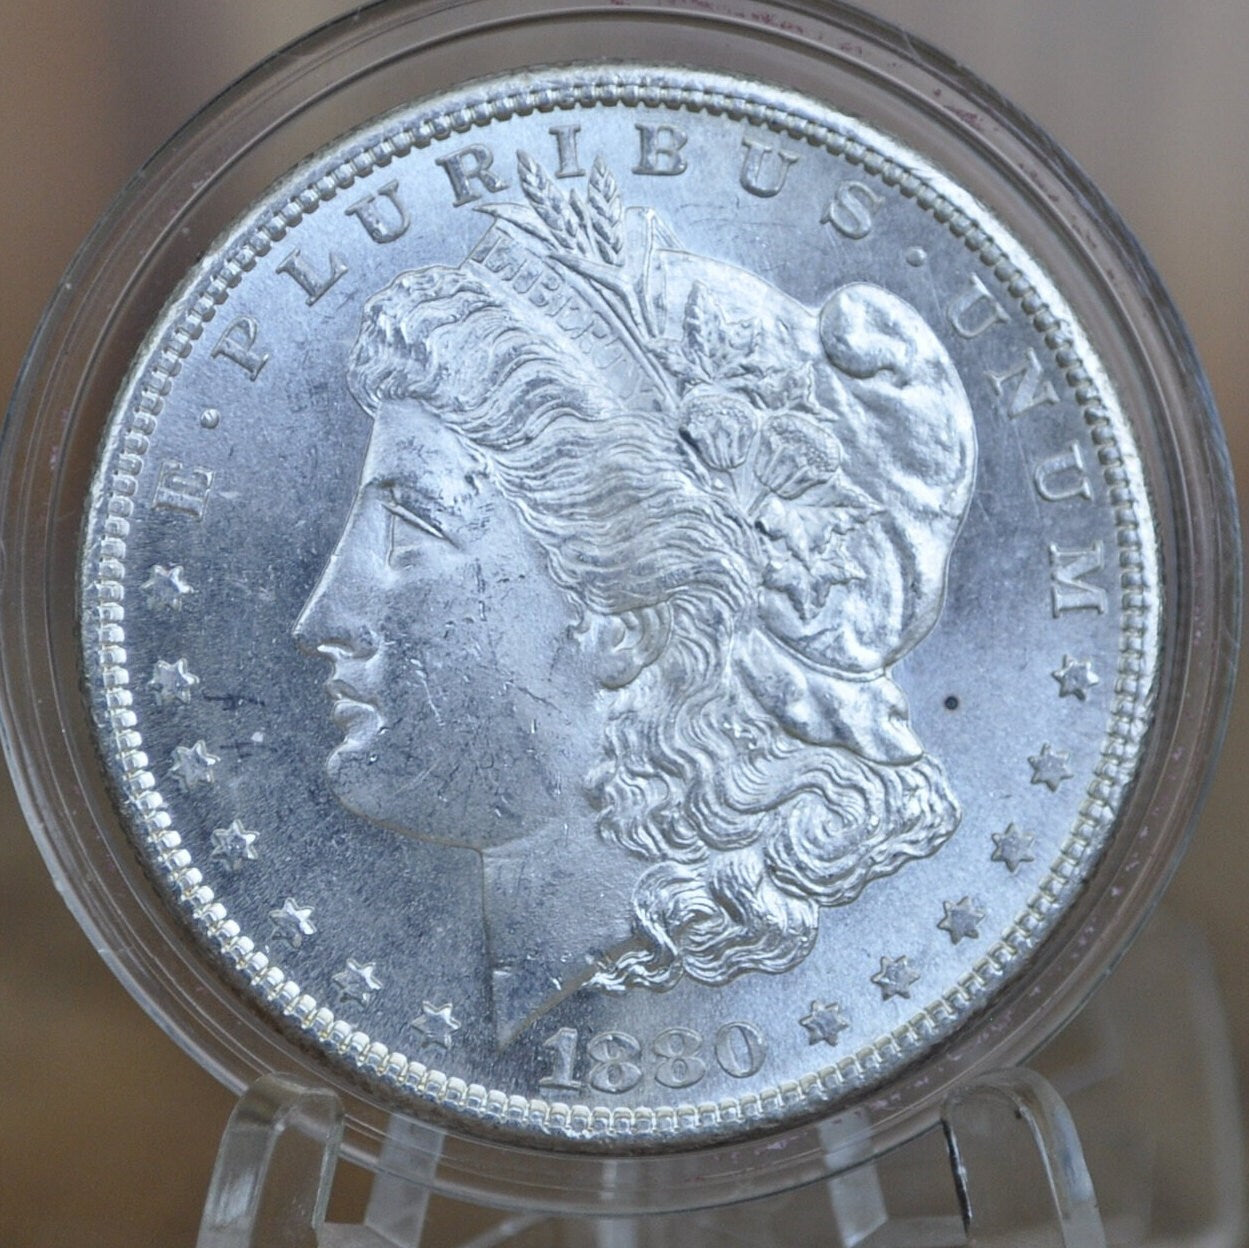 1880-S Morgan Silver Dollar - Choose by Grade / Condition - San Francisco Mint - Silver Dollar 1880 S - 1880 S Morgan Dollar